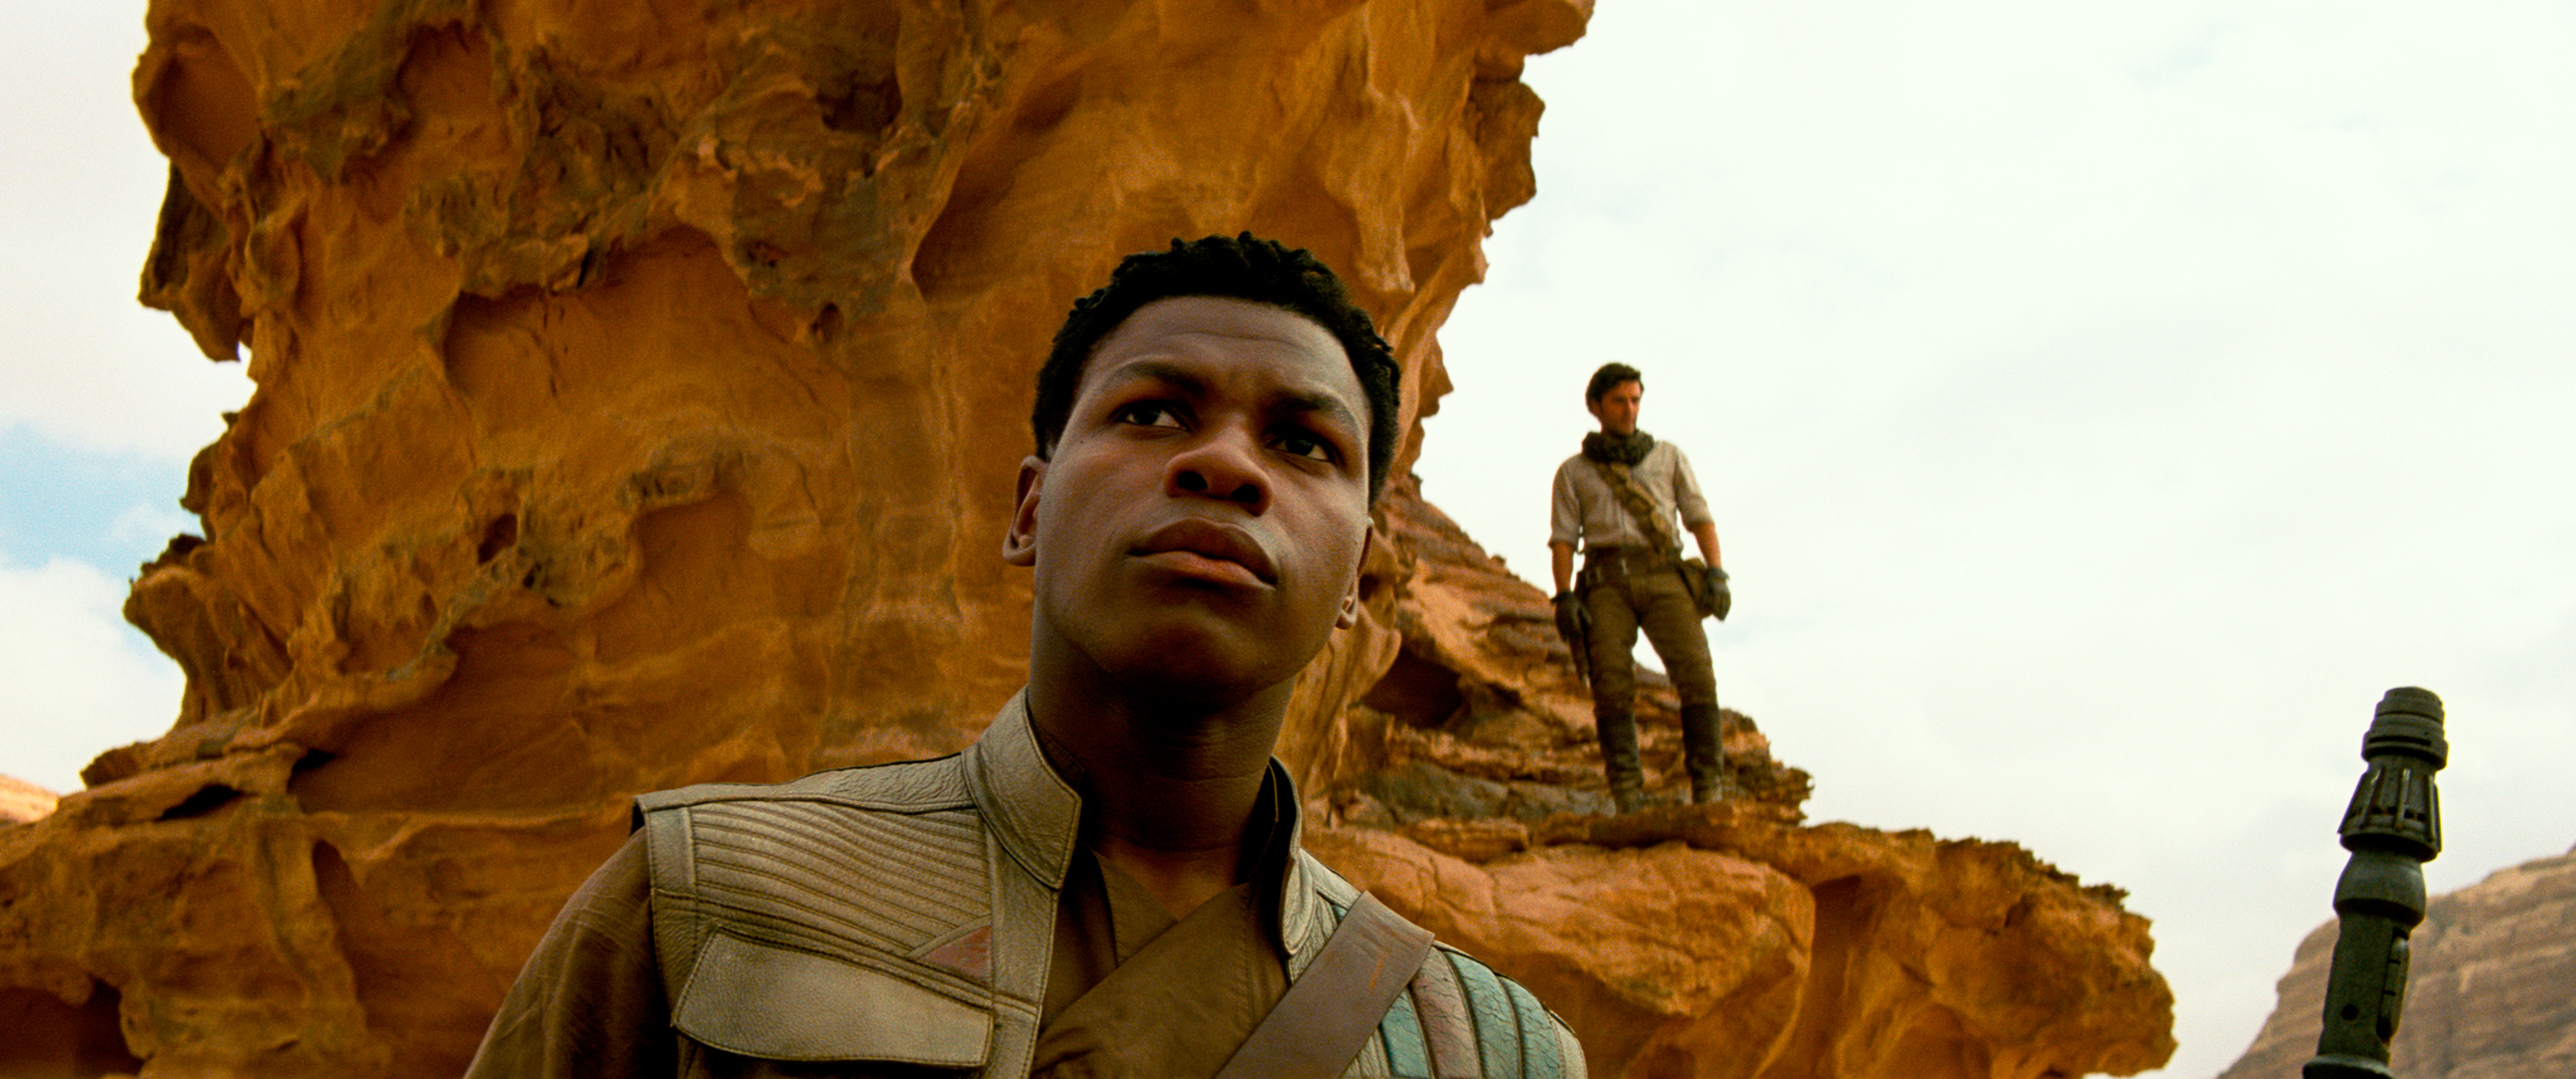 Finn (John Boyega) with Poe (Oscar Isaac) on a ridge behind him in Star Wars: The Rise of Skywalker